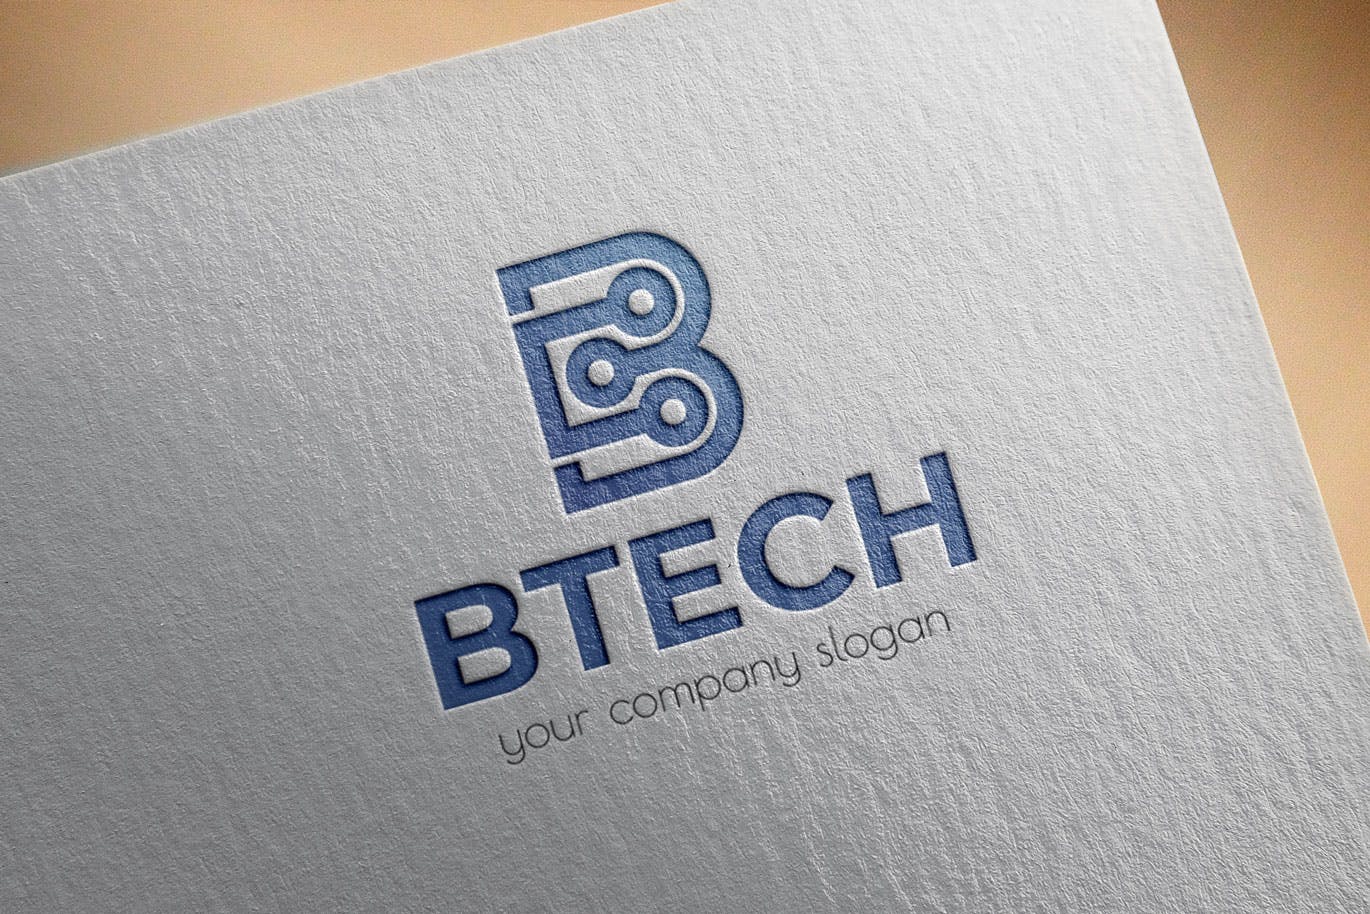 基于B字母图形的企业Logo设计非凡图库精选模板 Letter Based Business Logo Template插图(2)